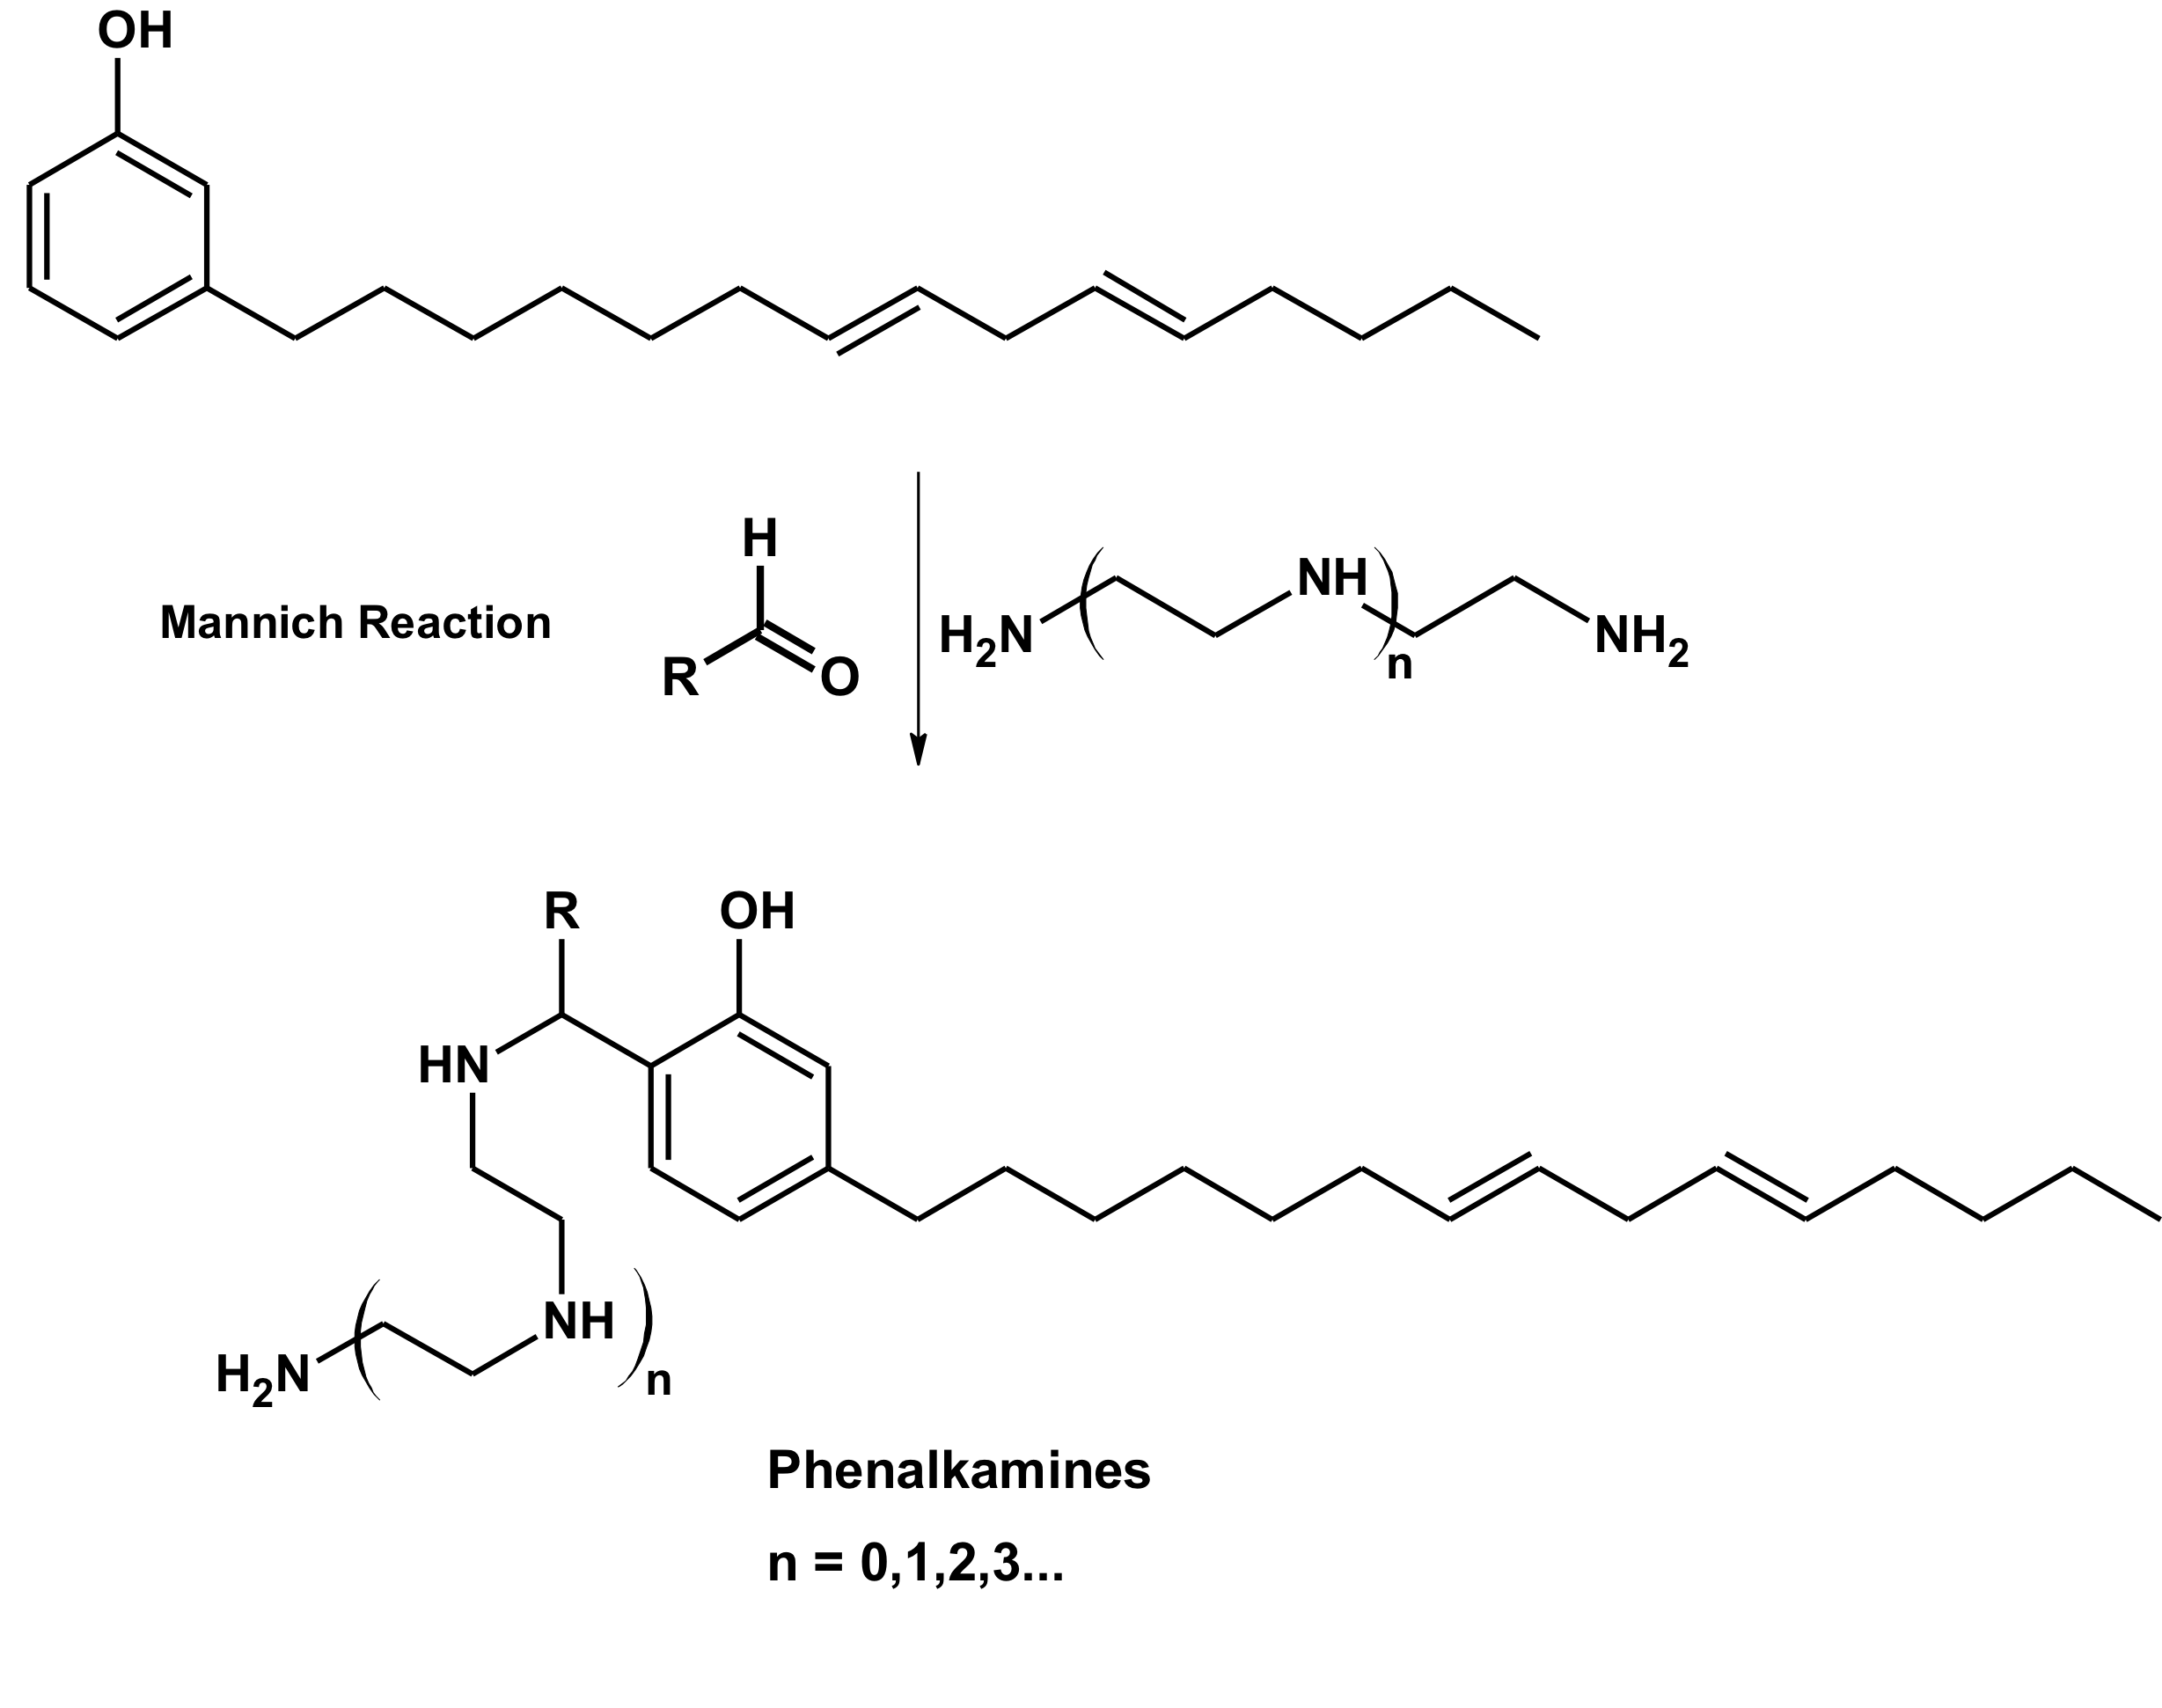 phenalkamines diagram - mannich reaction